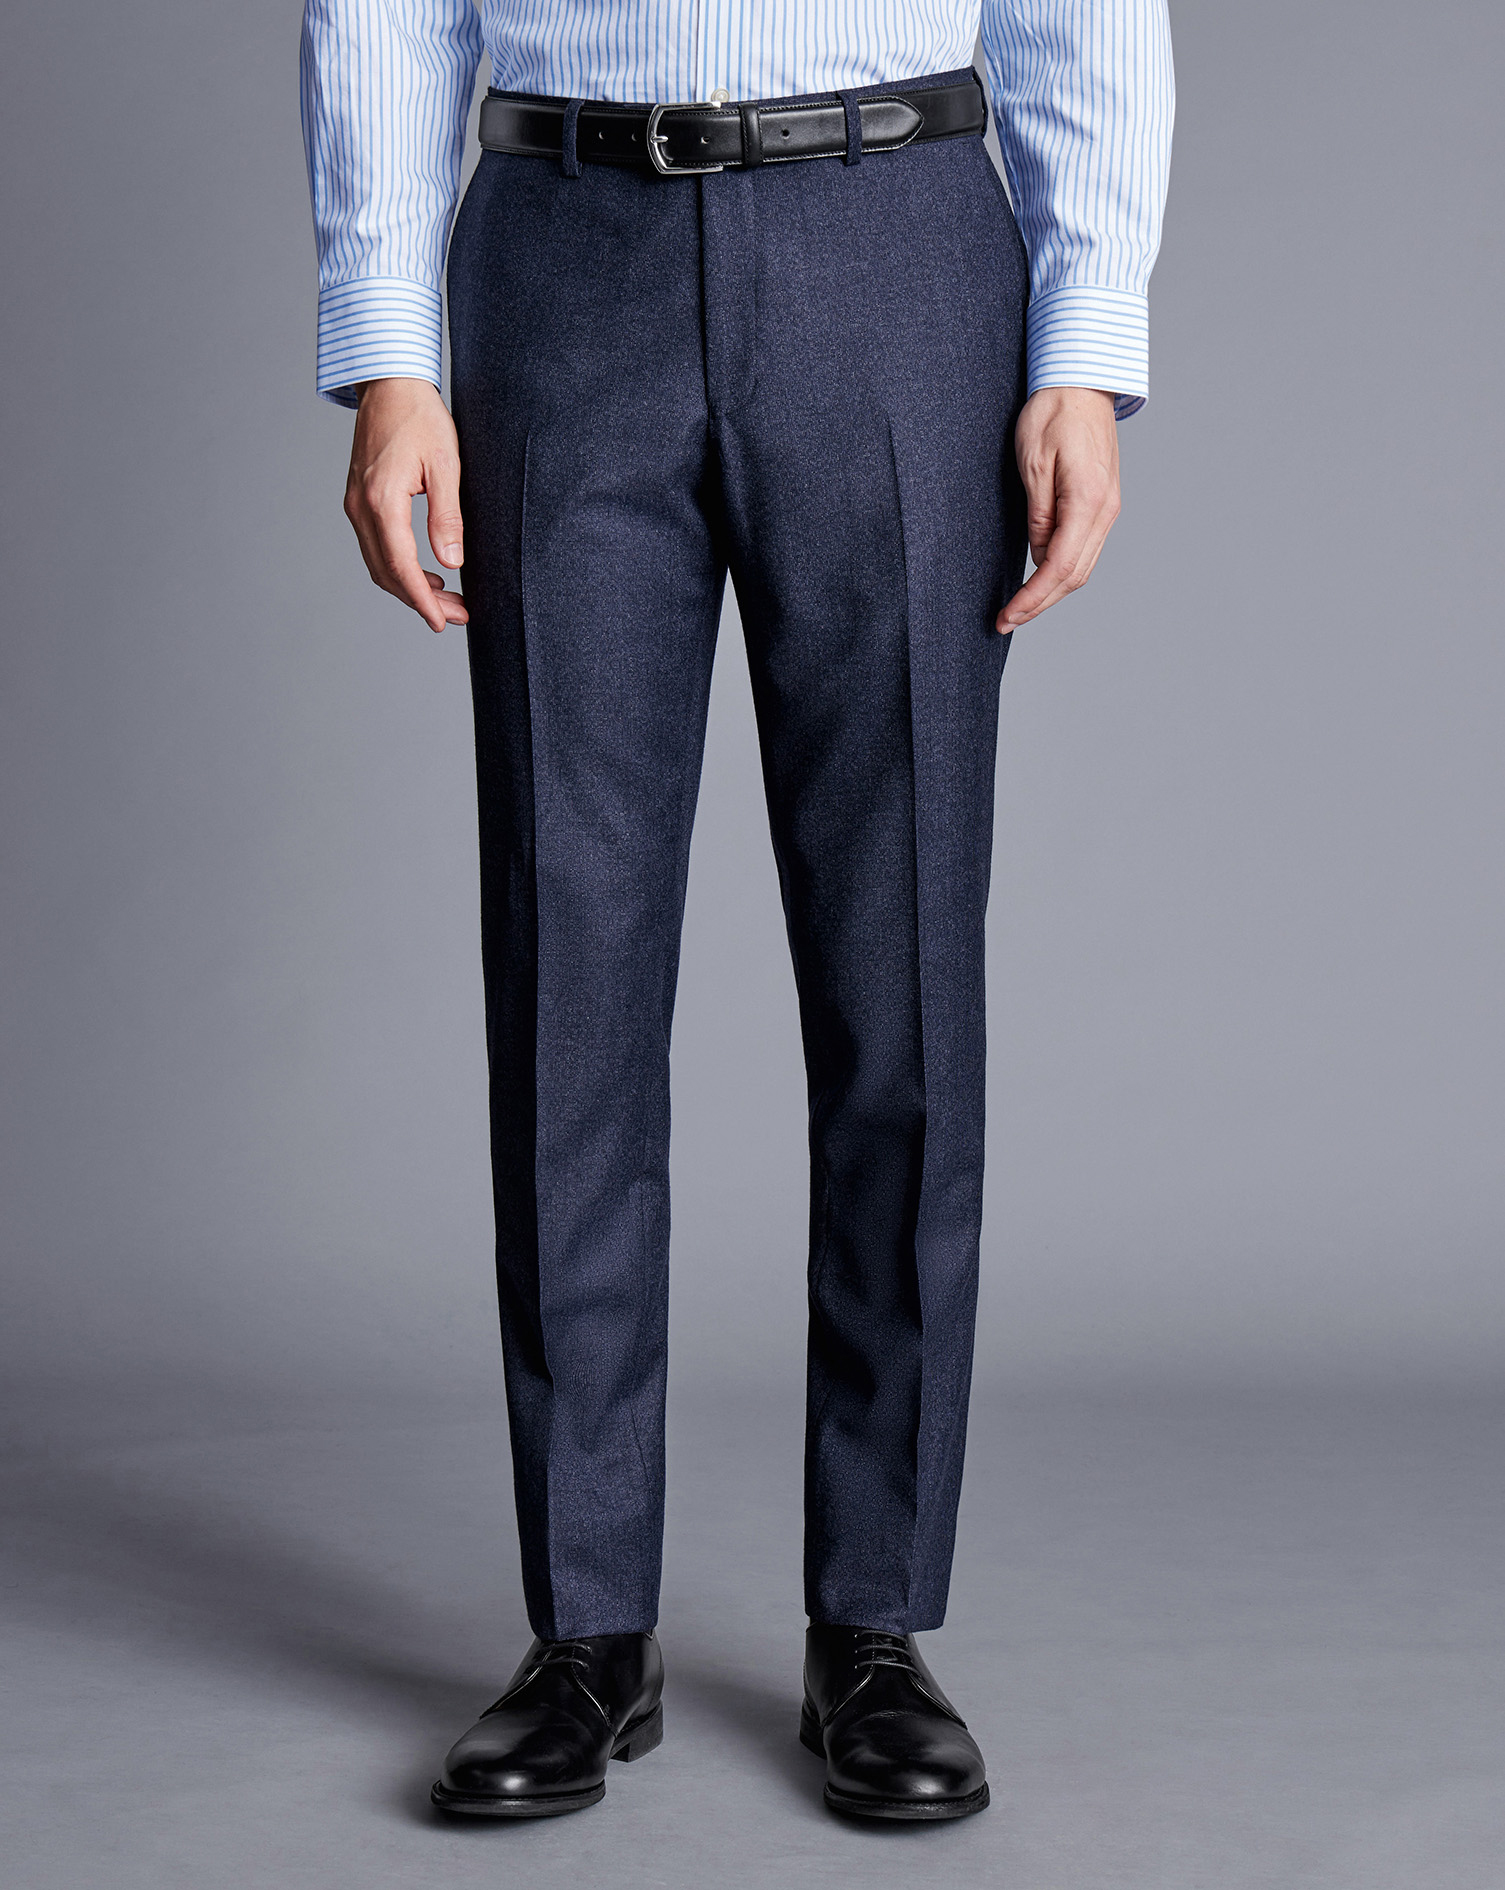 Men's Charles Tyrwhitt Italian Pindot Suit Trousers - Denim Blue Size 30/32 Wool
